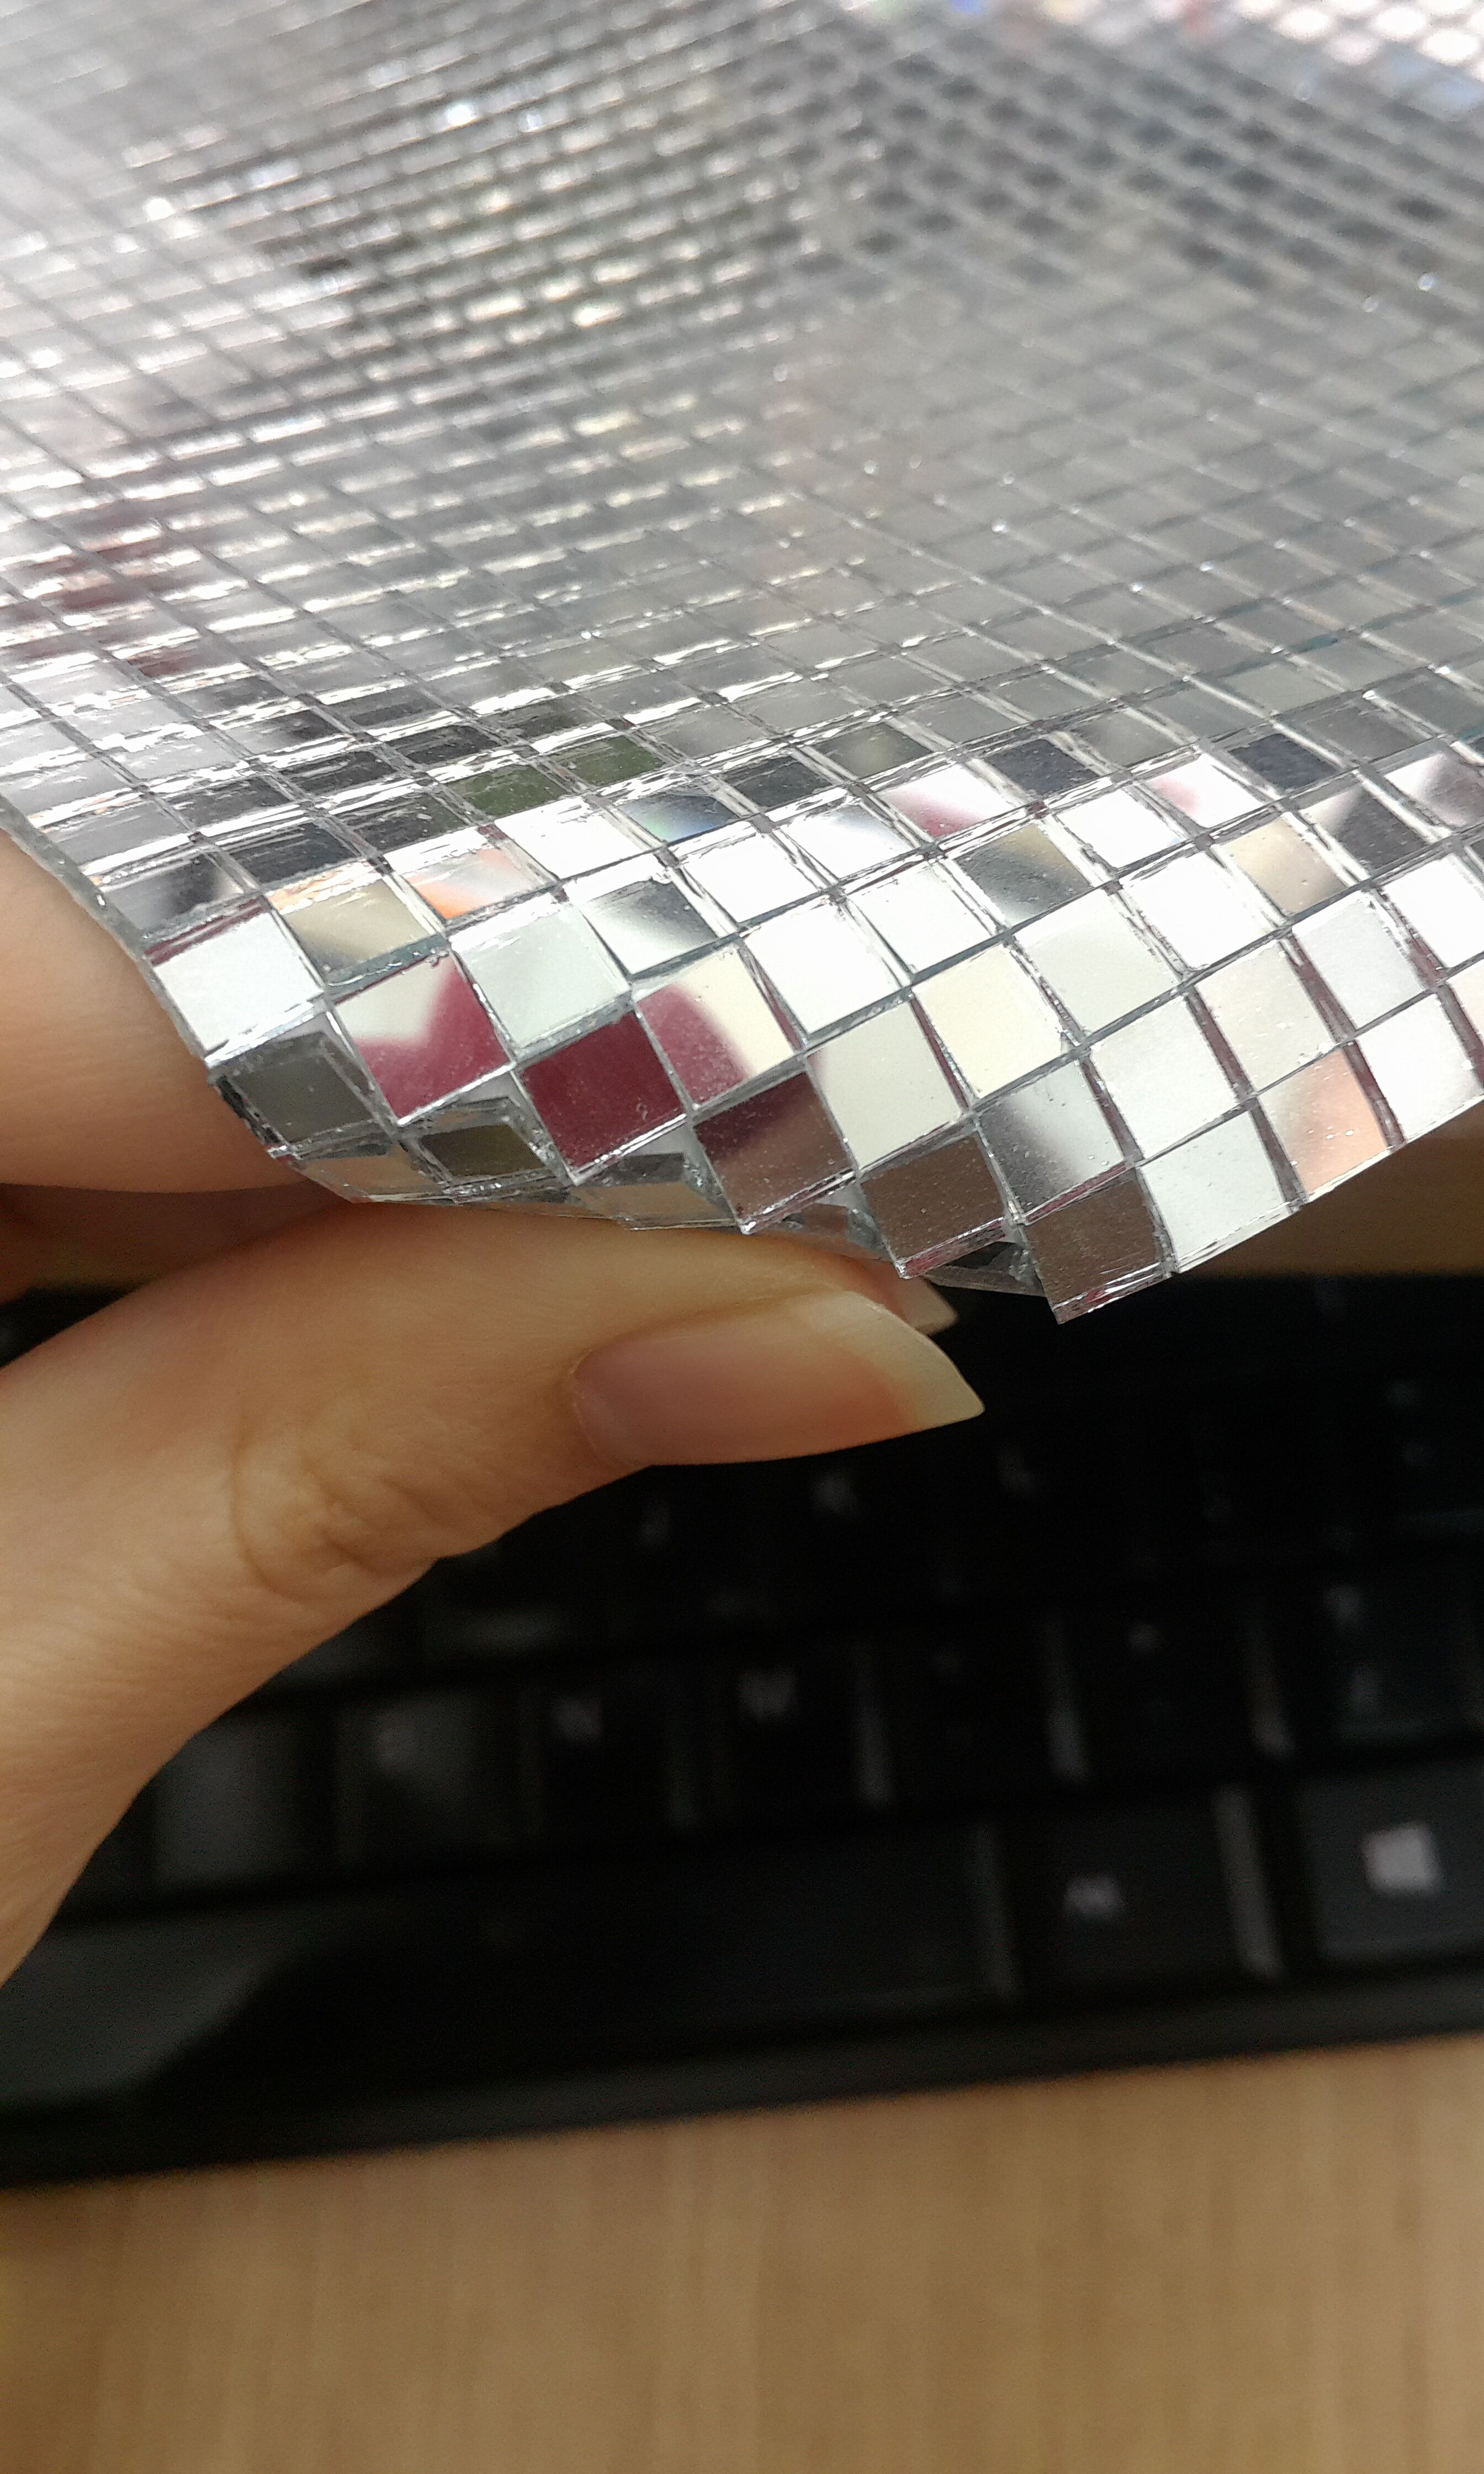 Small size mirror glass adhesive wall mirror sticker self adhesive mirror mosaic tiles